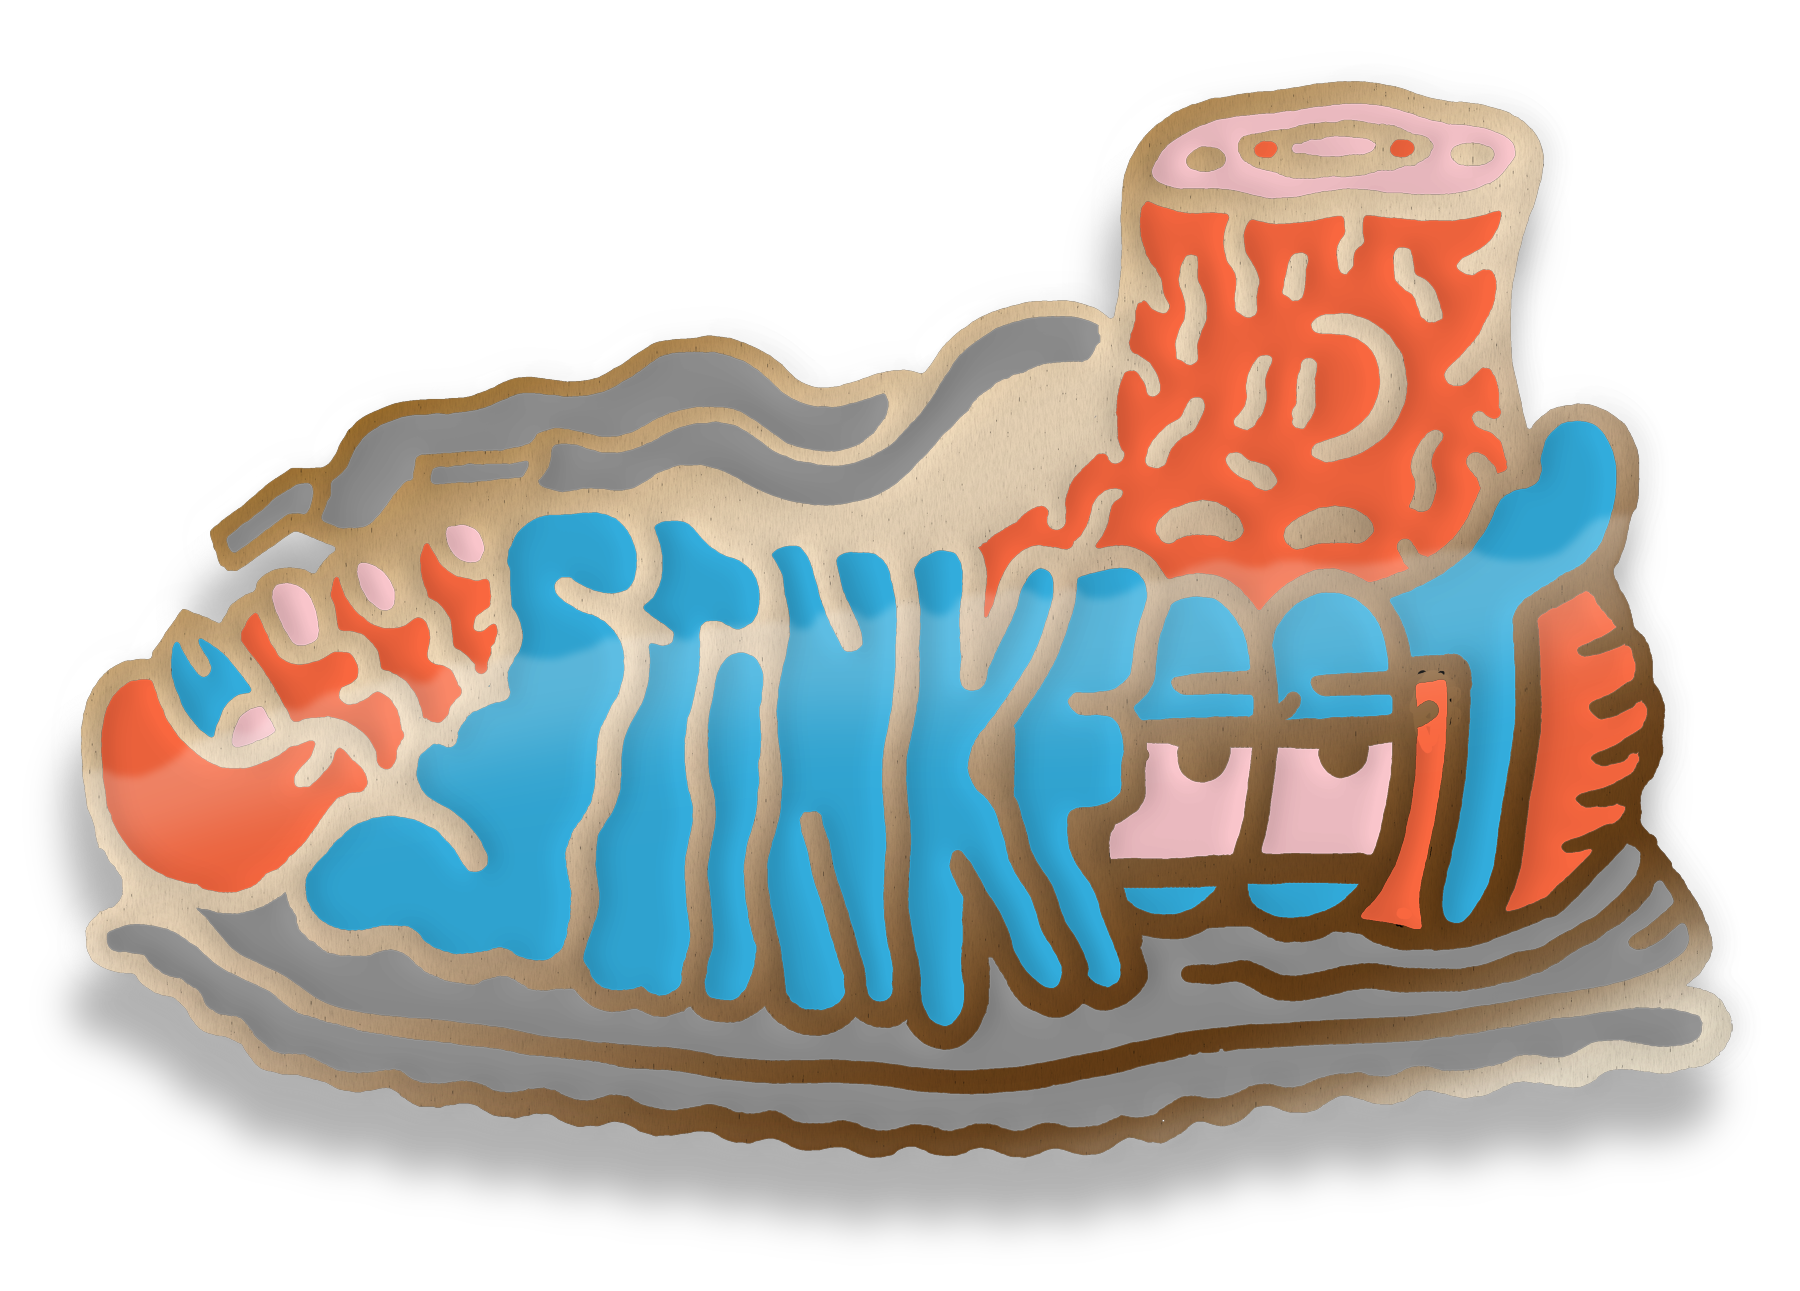 Stinkfoot